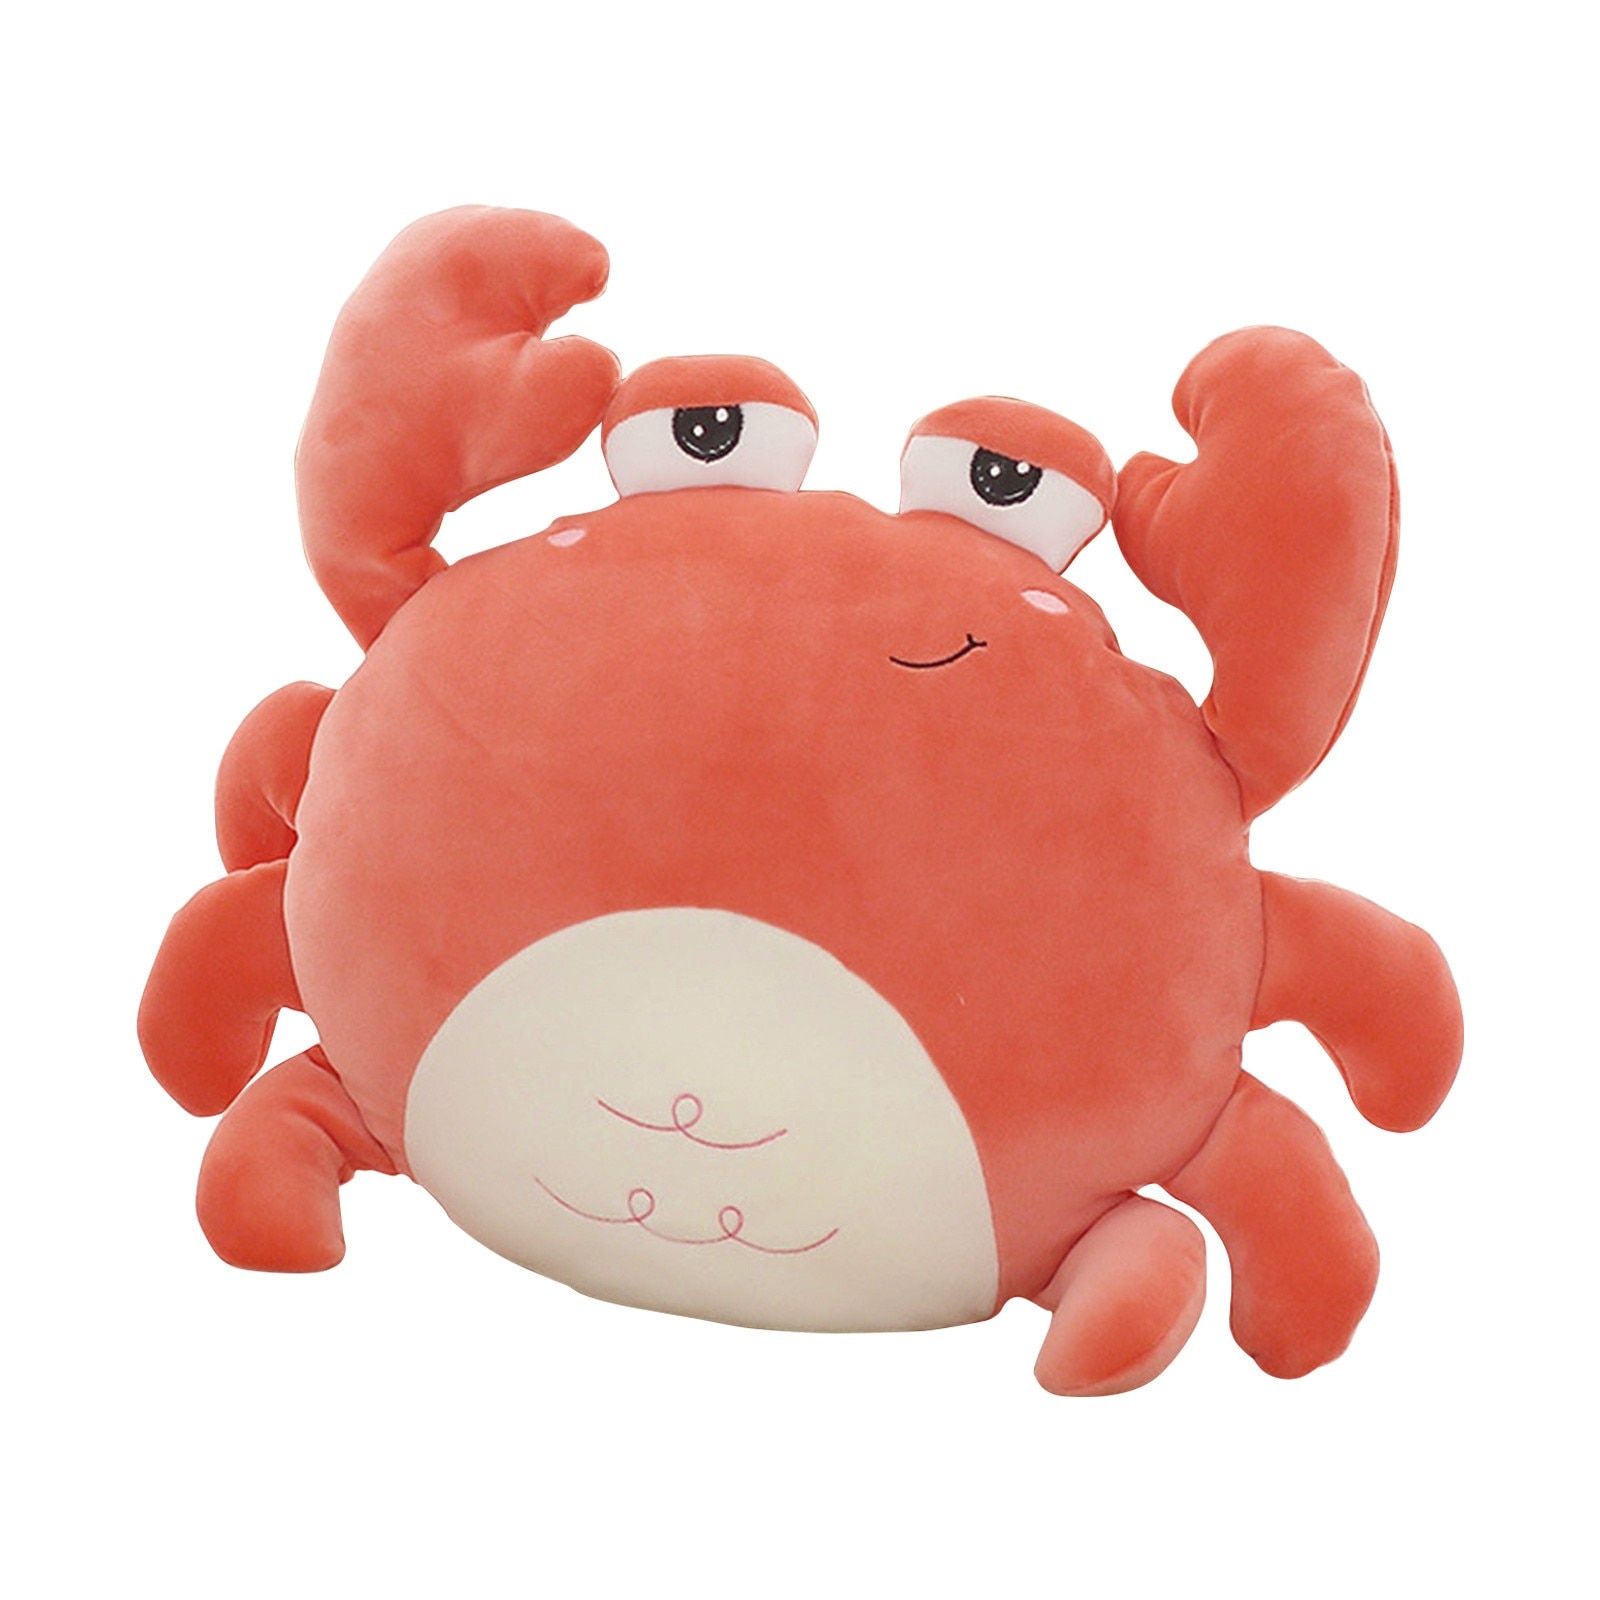 Plush Simulation Crab Cartoon Doll Pillow Sleeping Cushion Children Toy Doll cushions for decor christmas gifts Toy for sleep f5